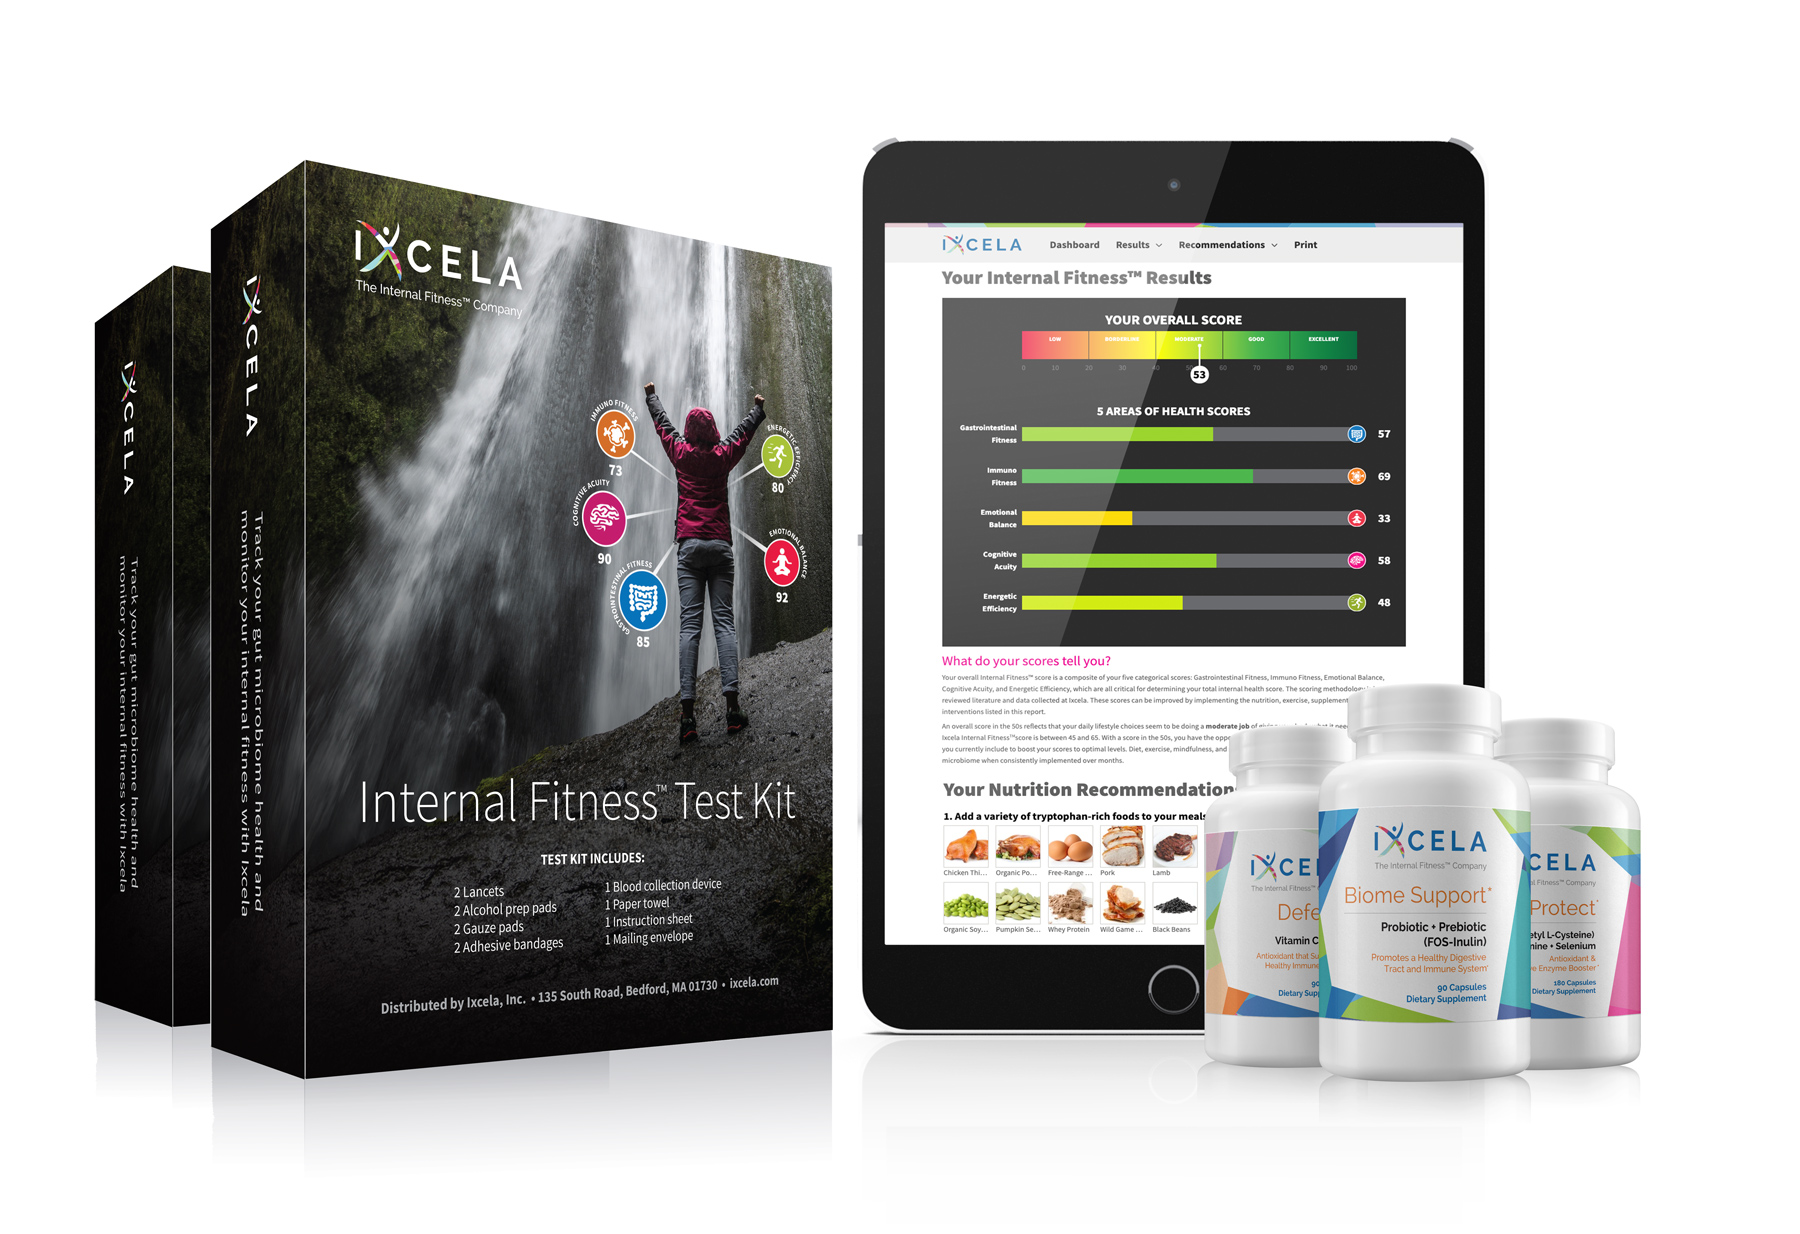 Ixcela internal fitness kit